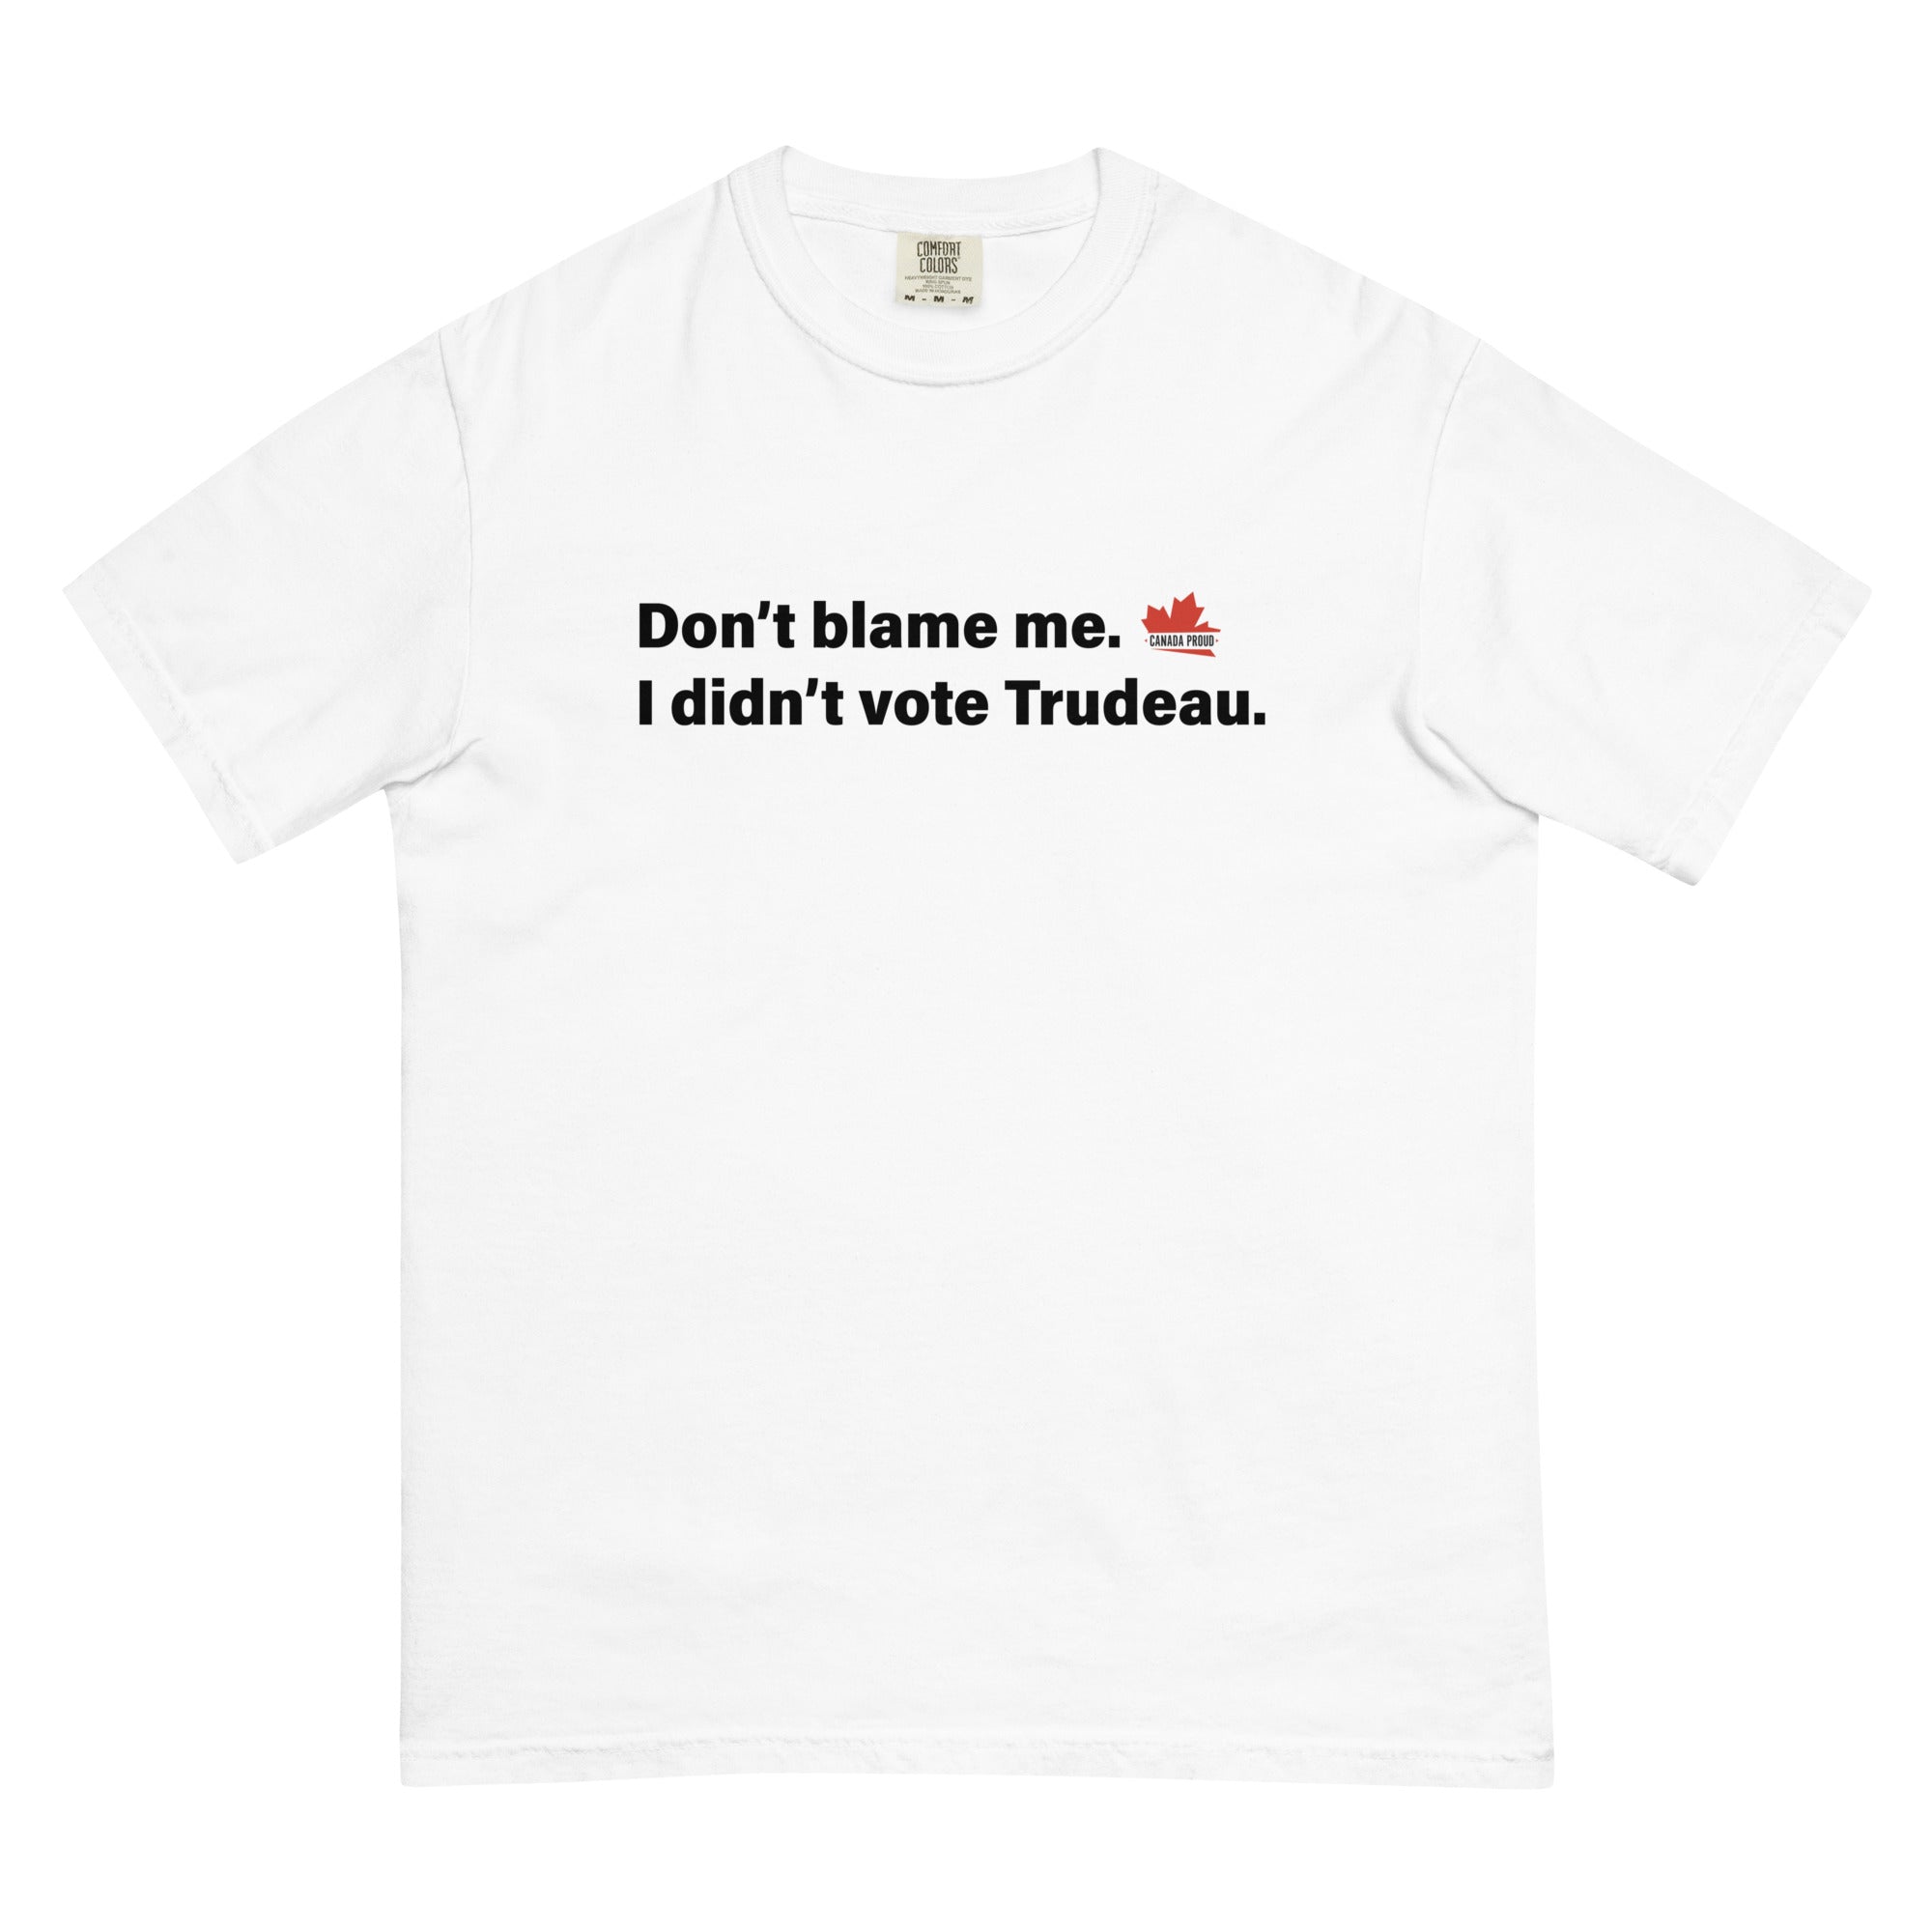 Men’s "Don't Blame Me" T-shirt